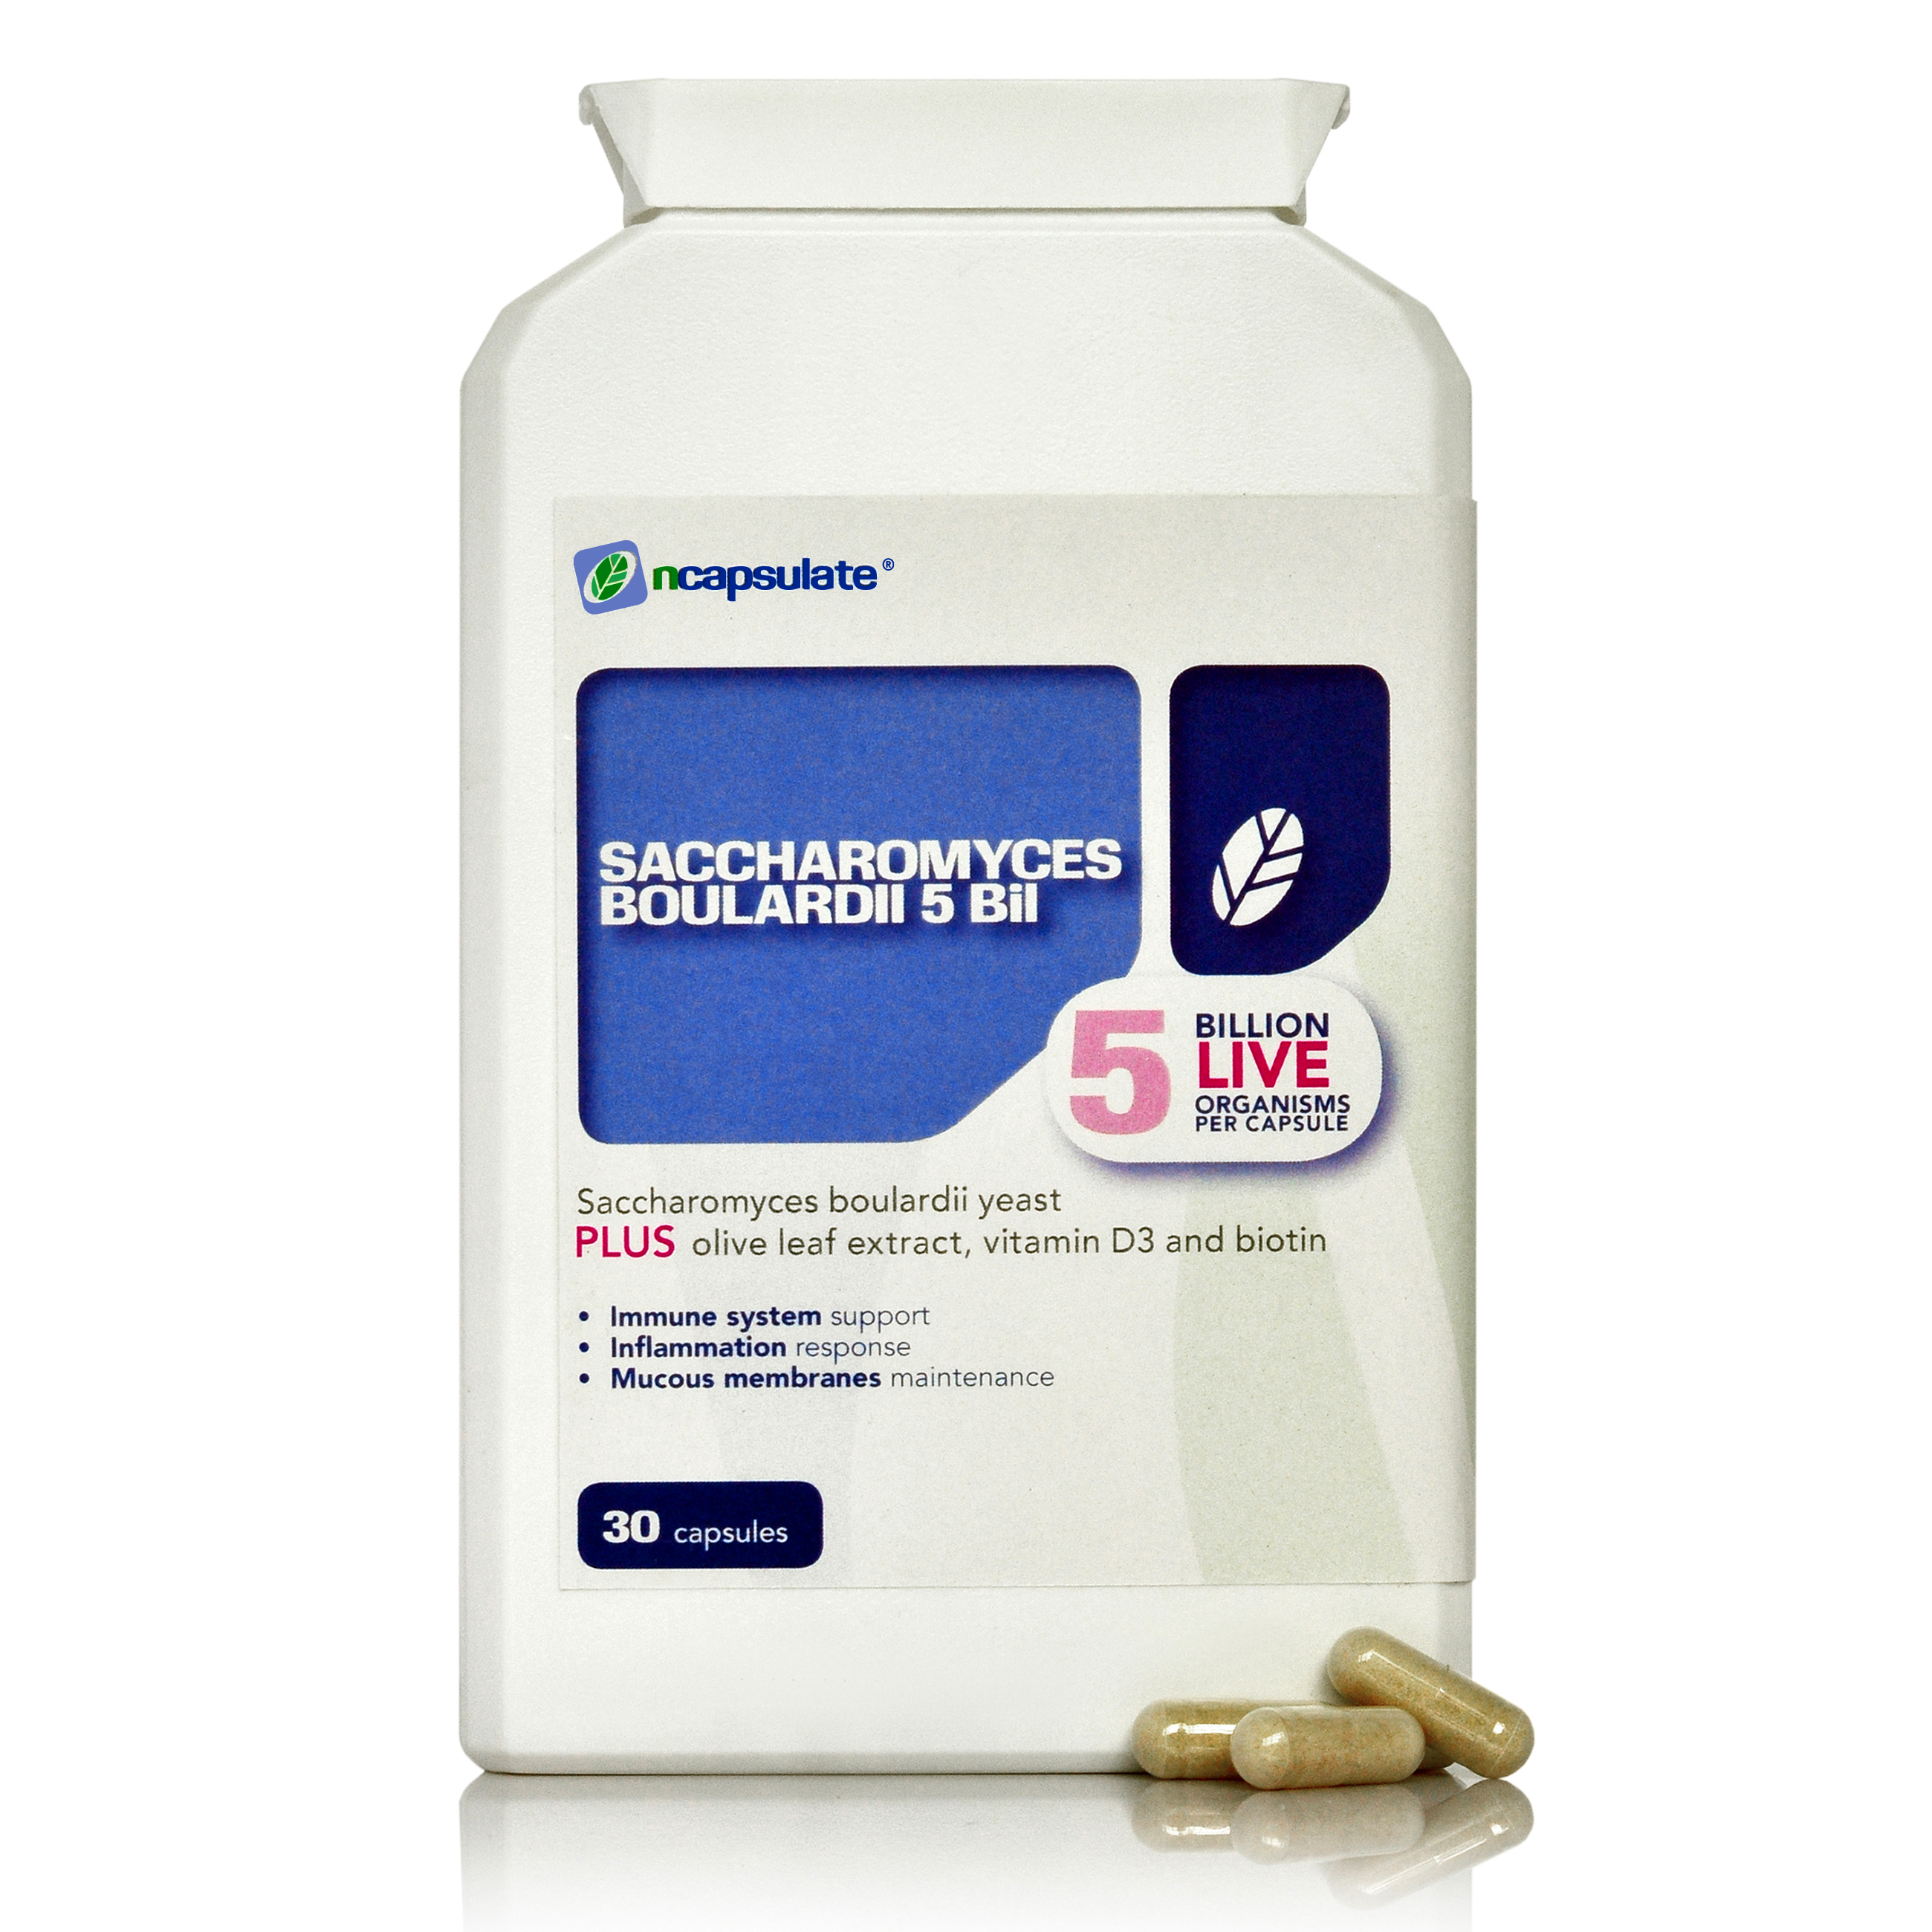 SACCHAROMYCES BOULARDII 5 BIL Probiotic Supplement